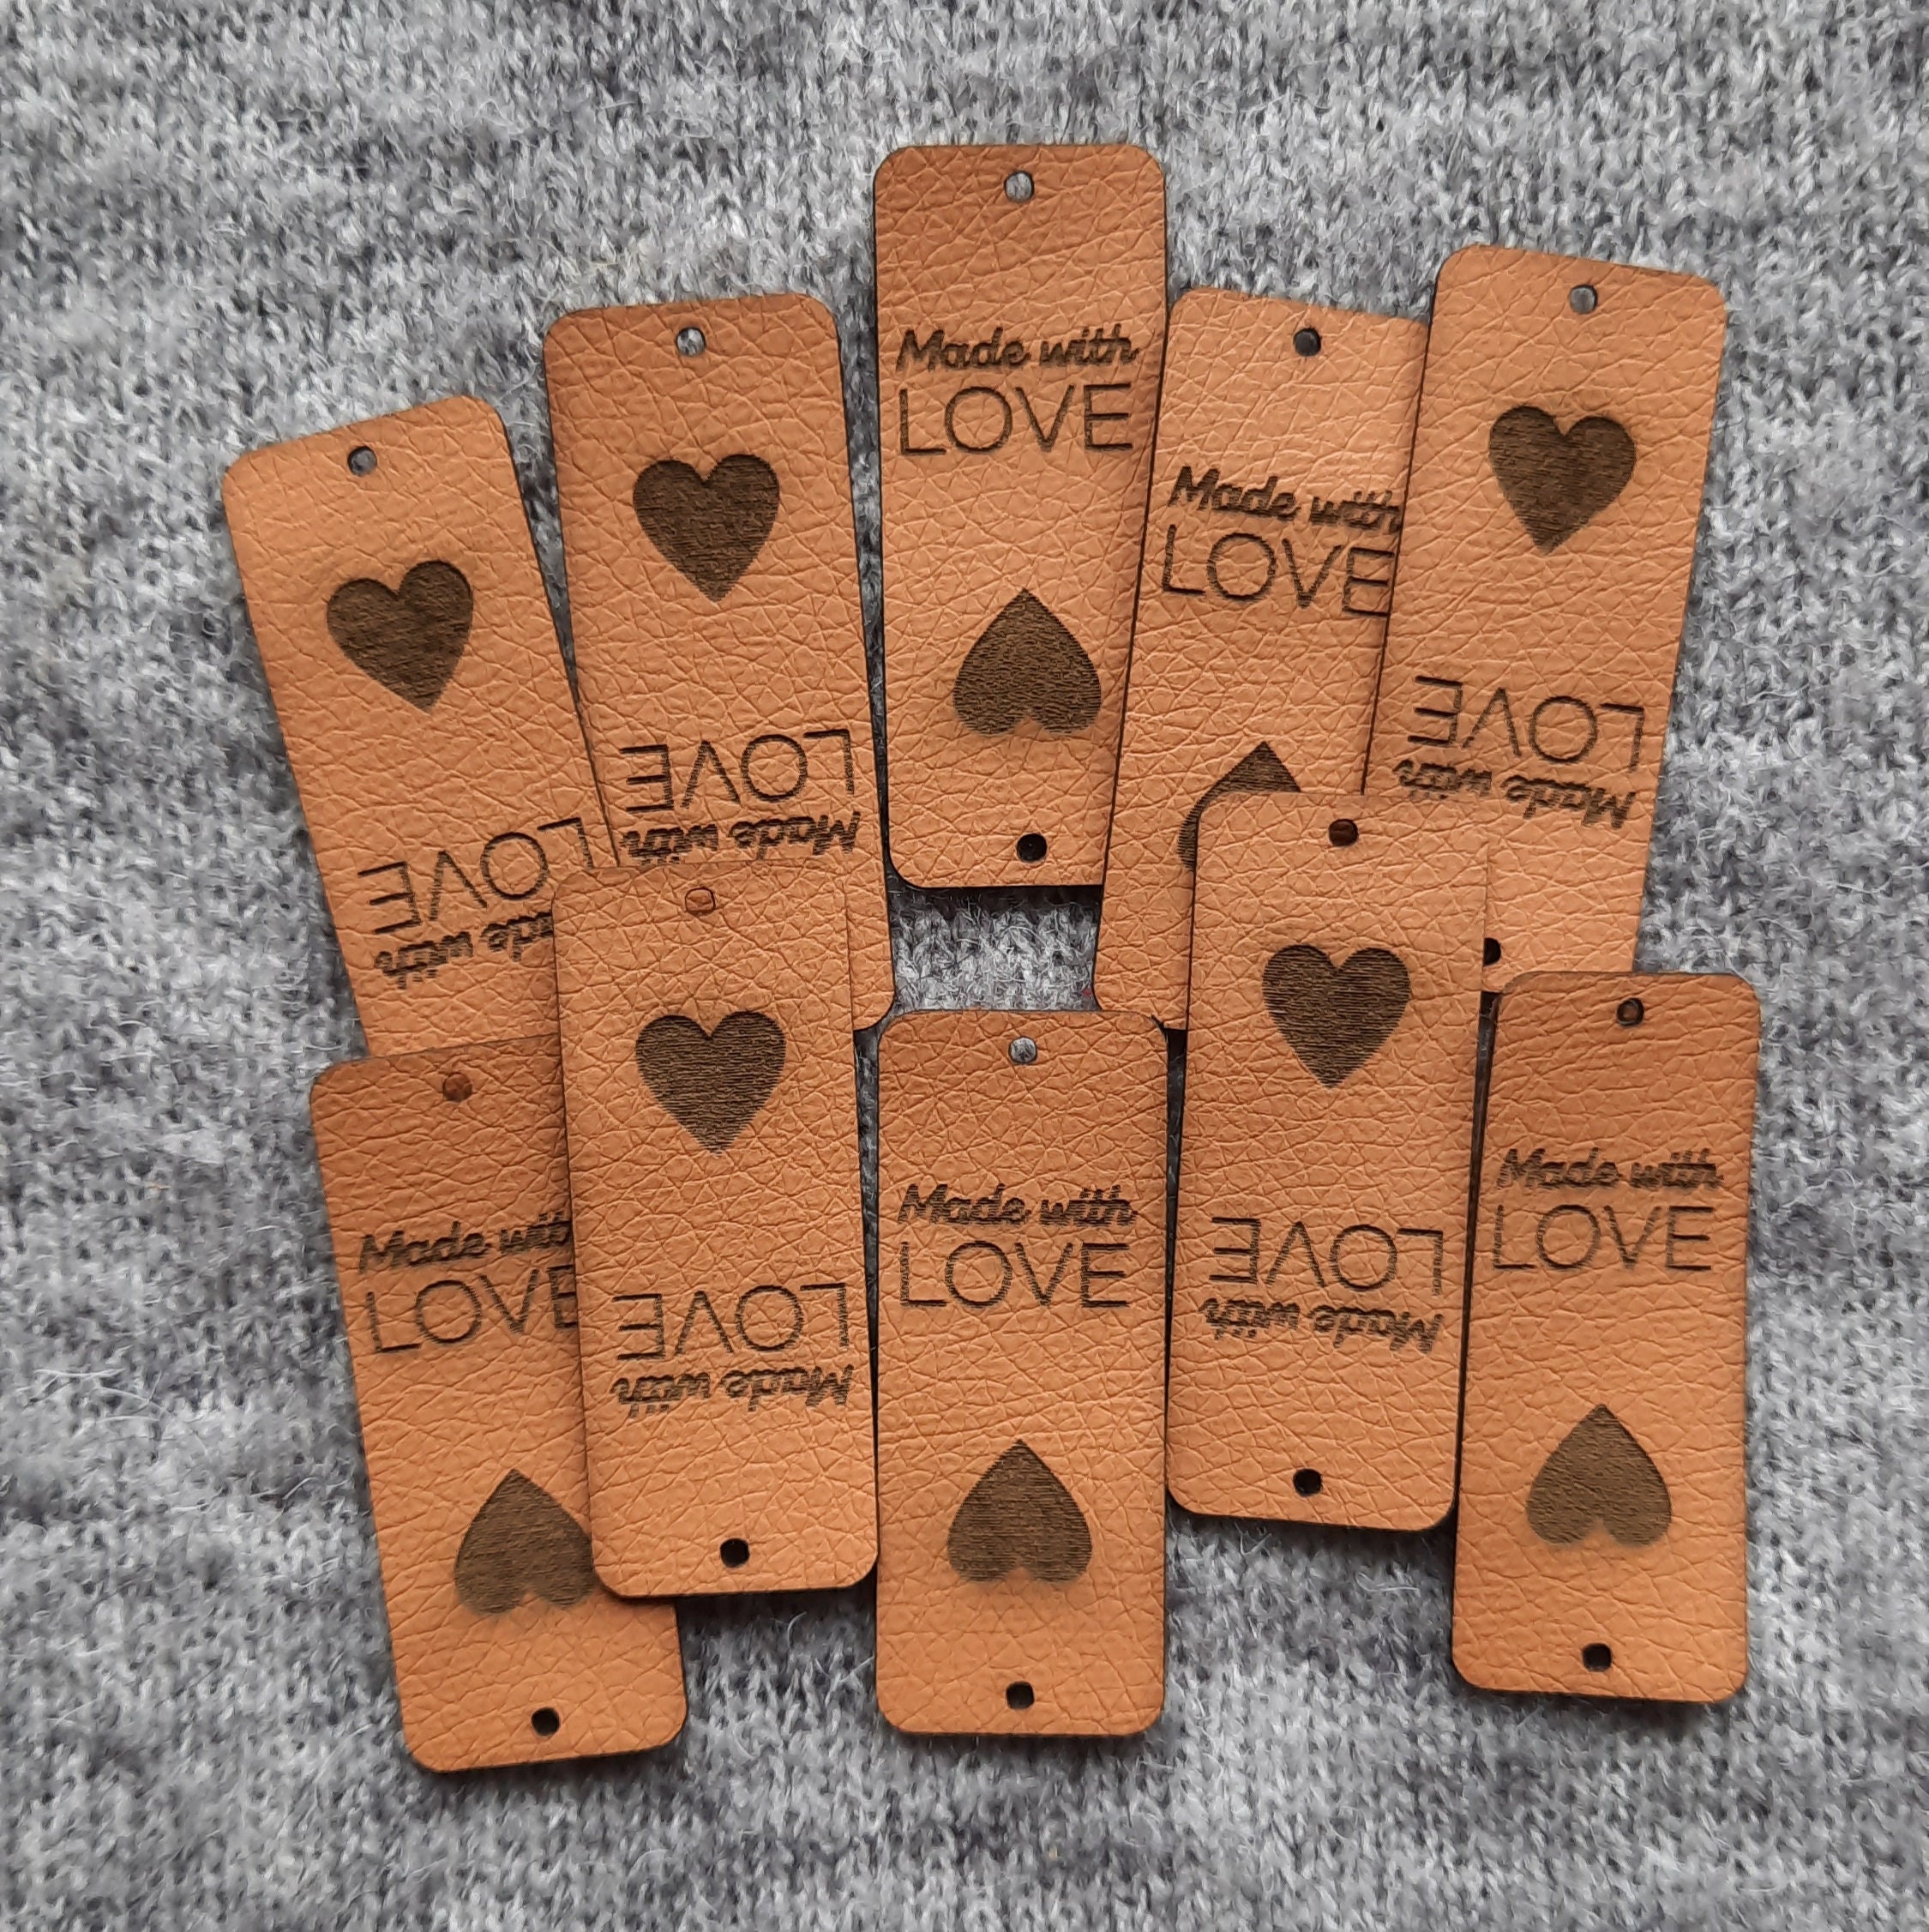 10x FAKE LEATHER TAGS Stitched with love étiquettes de couverture